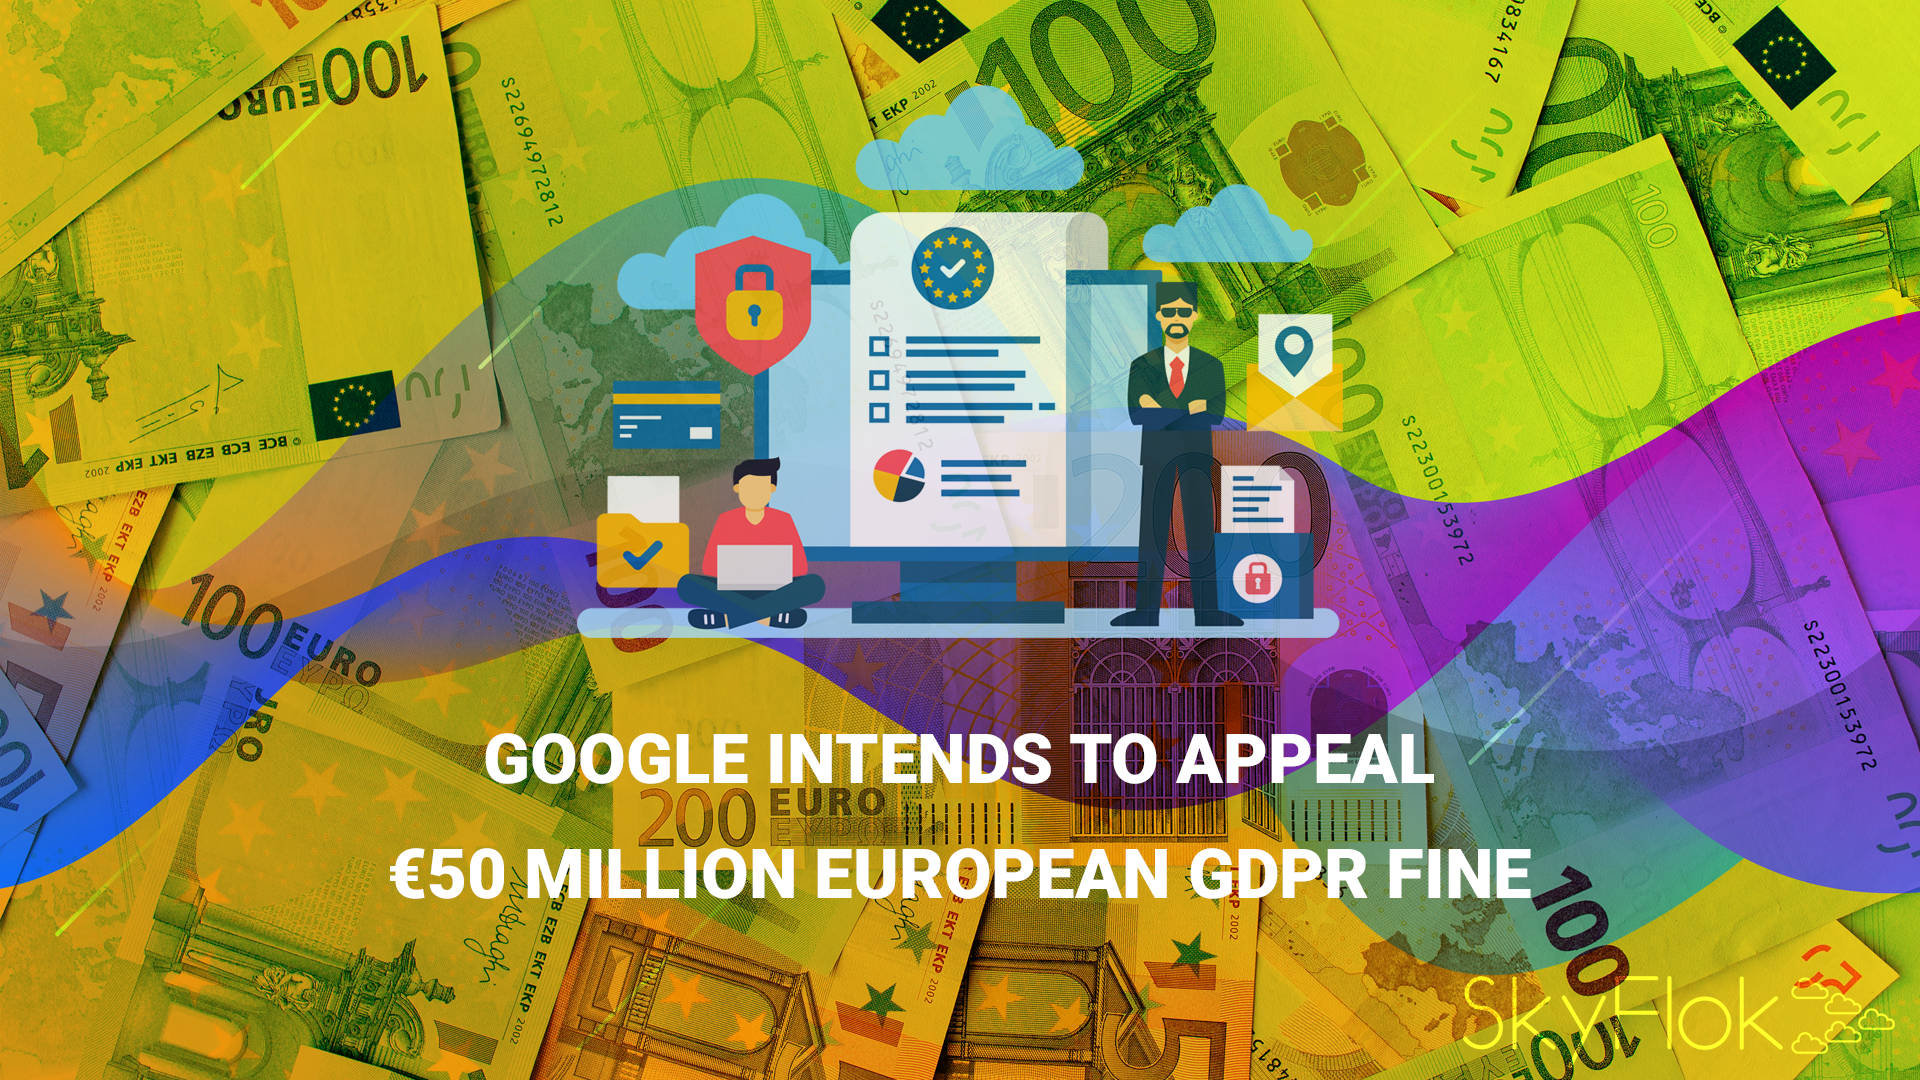 Google intends to appeal €50 million European GDPR fine